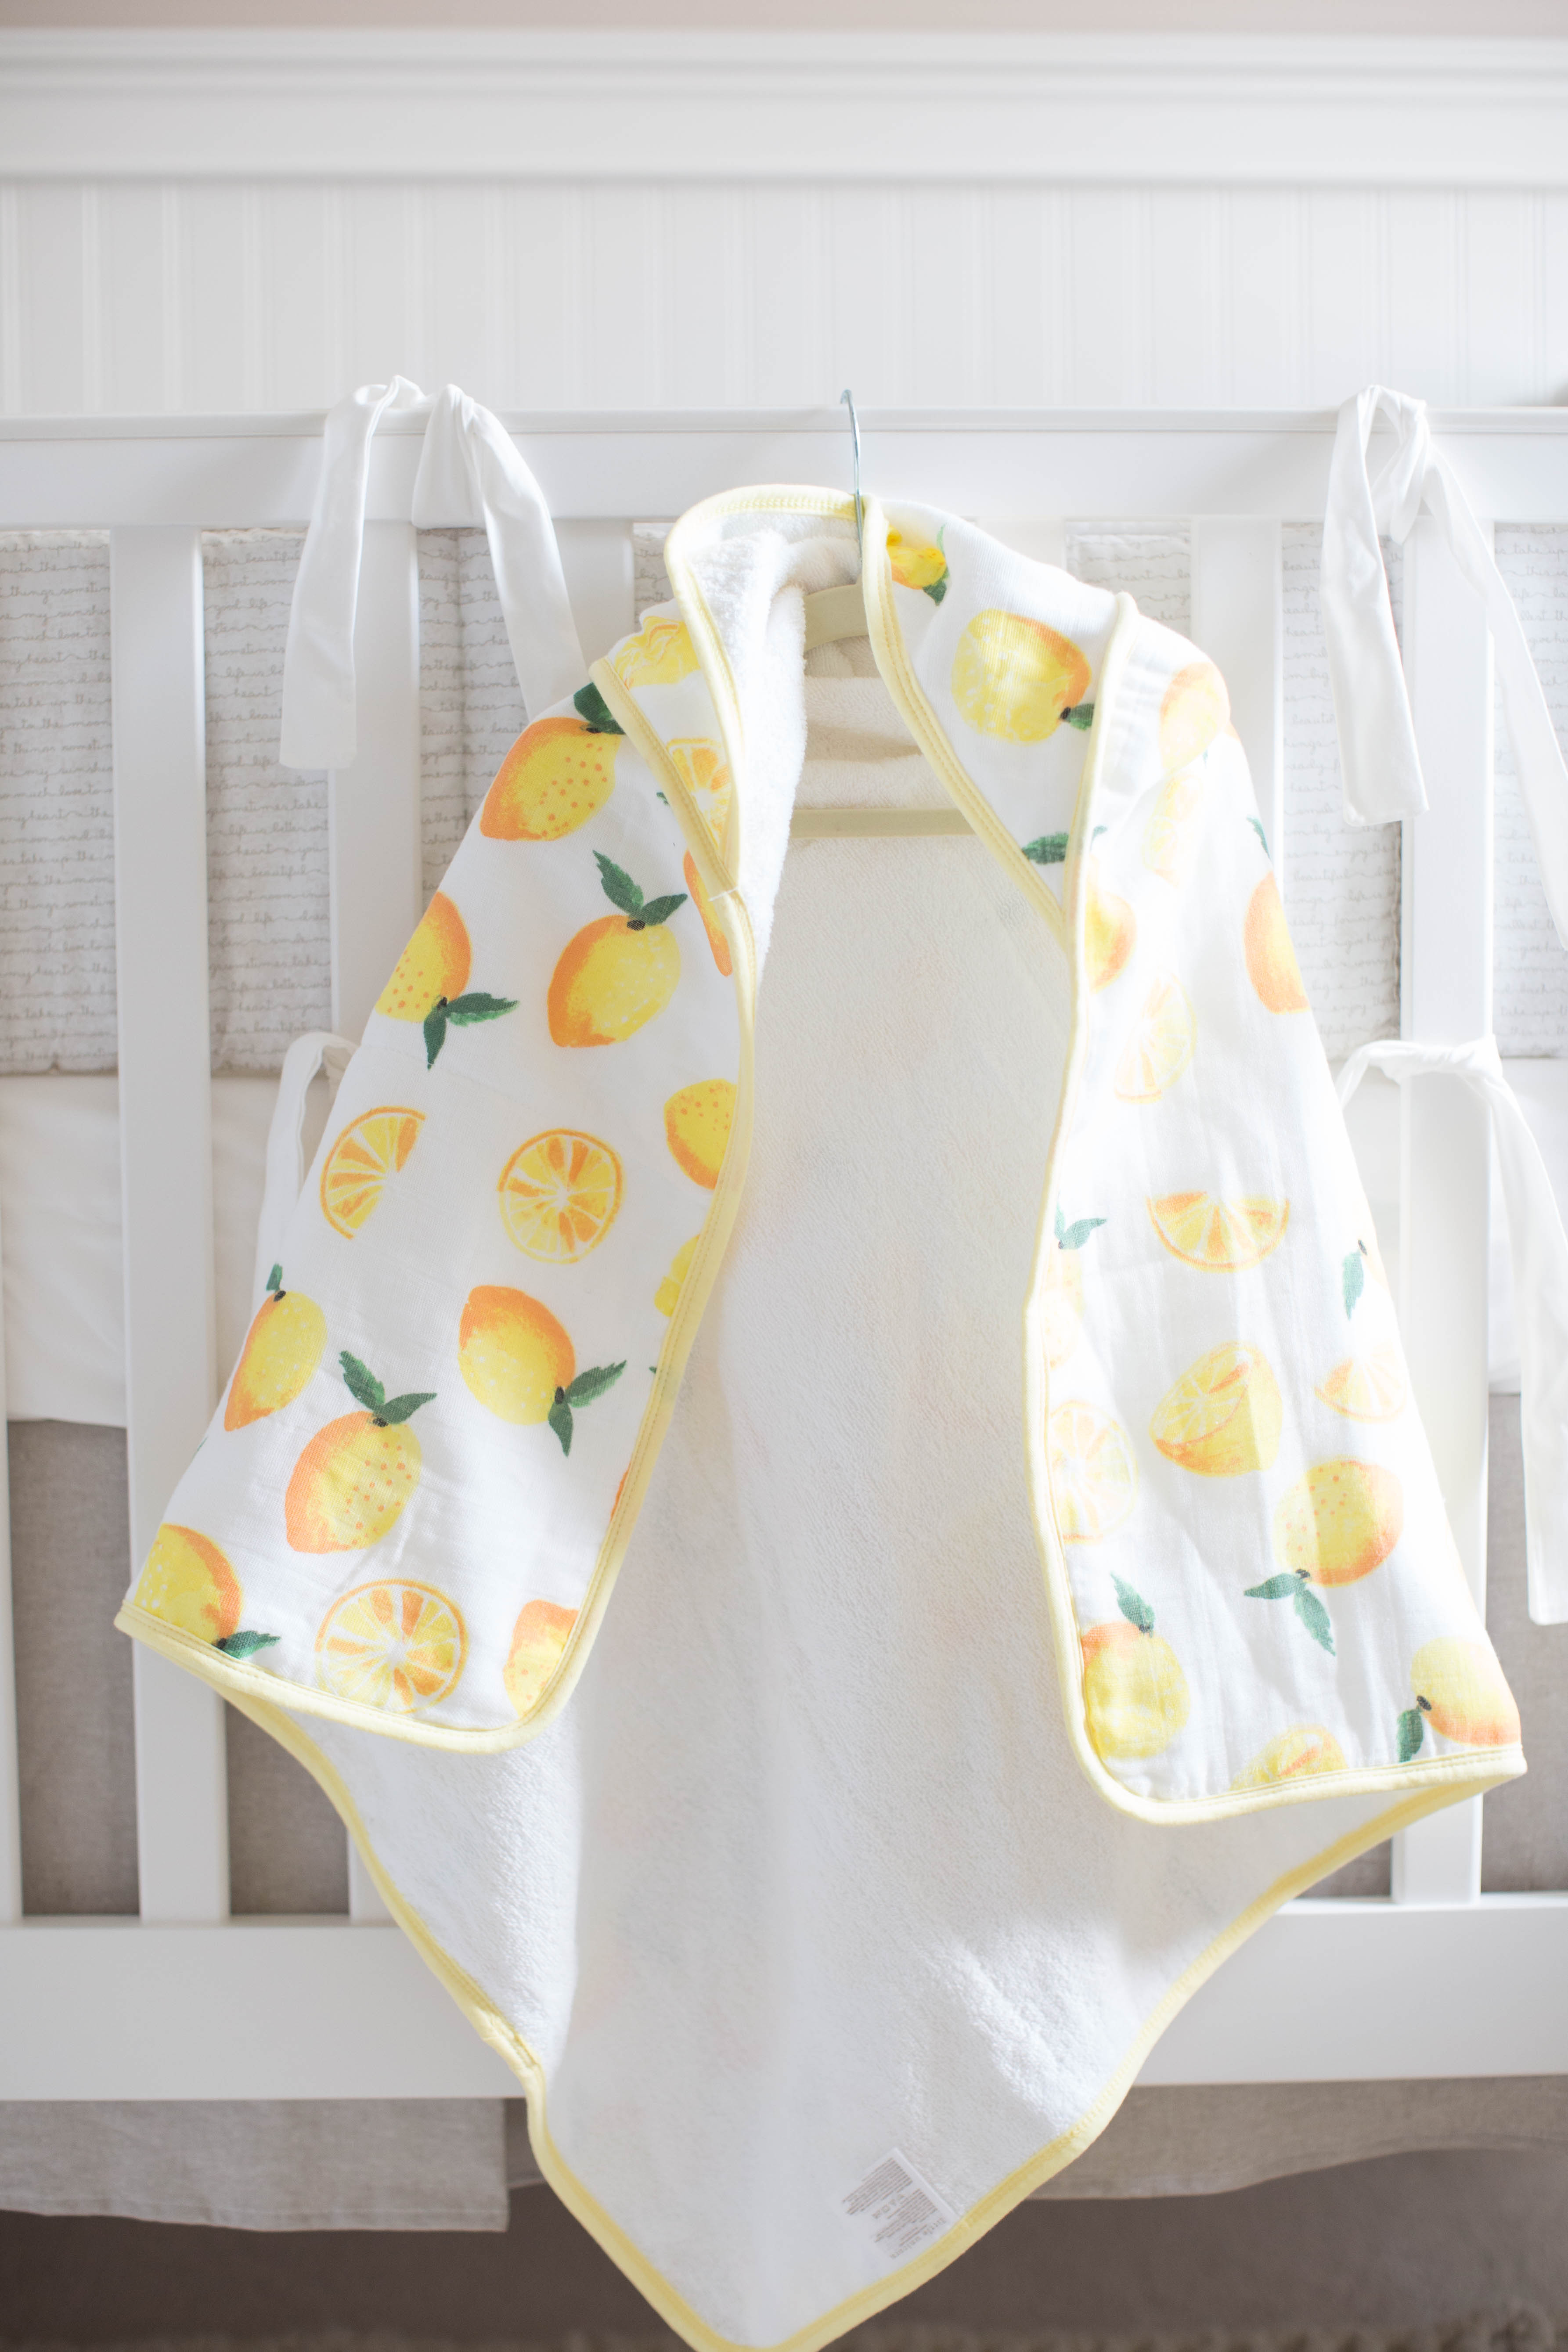 Lemon Baby Towel - Favorites Lately: Newton Baby Crib Mattress by North Carolina style blogger Coffee Beans and Bobby Pins